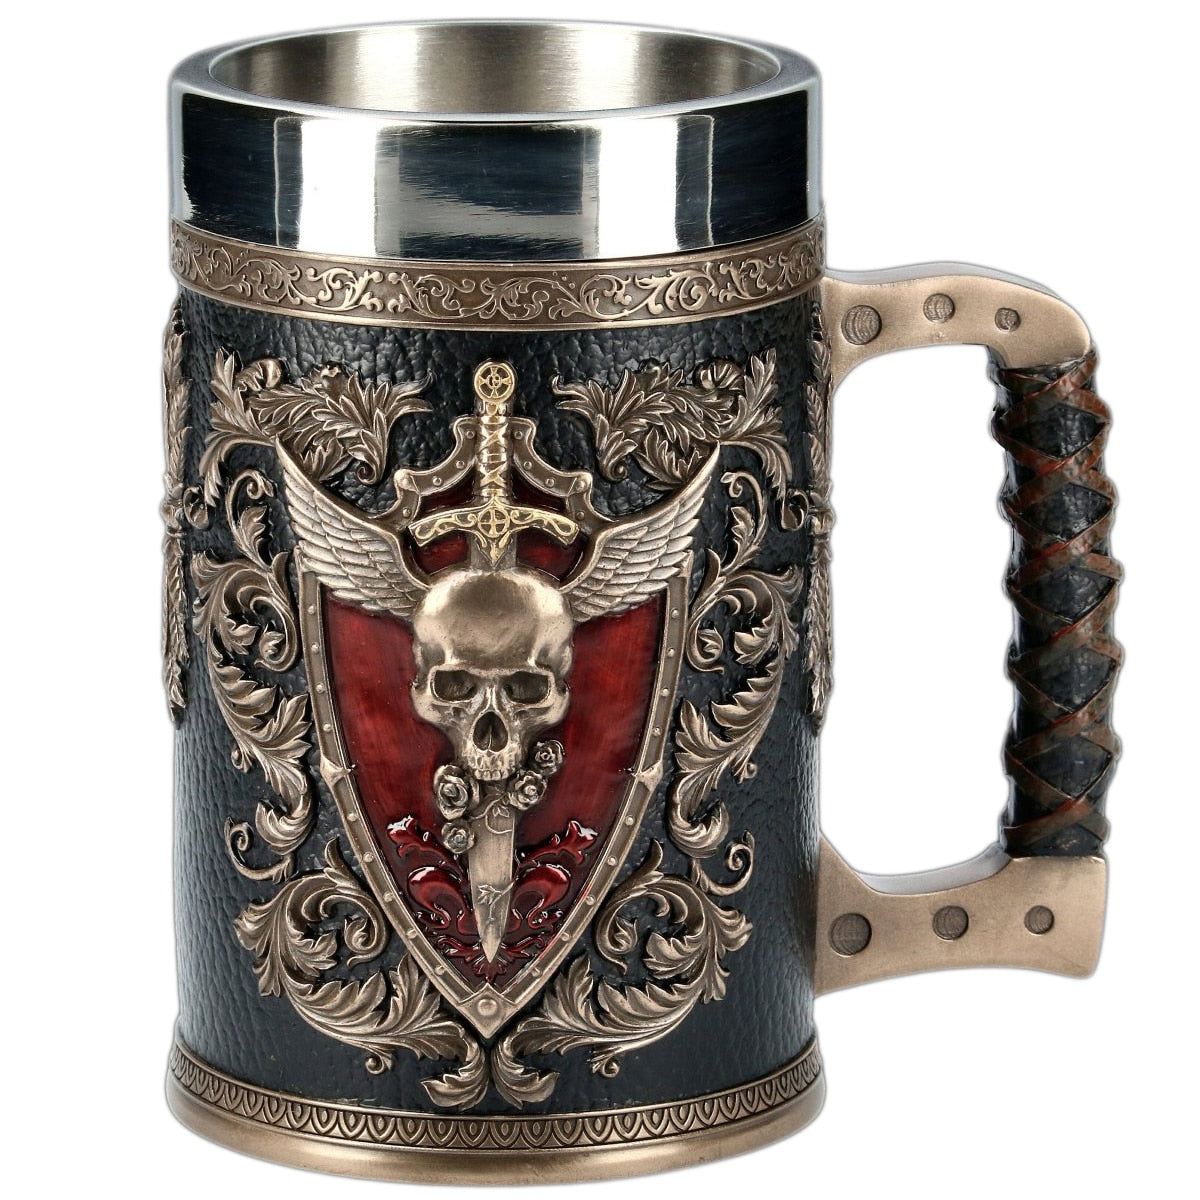 Medieval skull and sword beer tankard